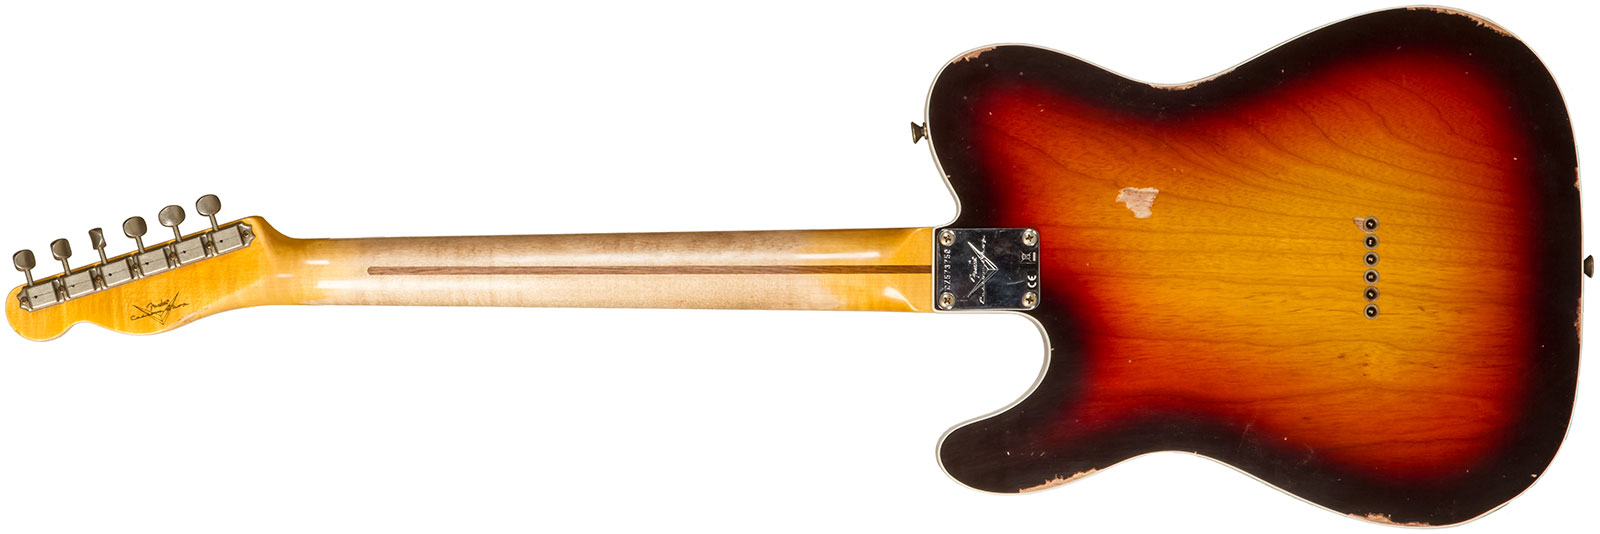 Fender Custom Shop Tele Custom 1959 2s Ht Mn #cz573750 - Relic Chocolate 3-color Sunburst - Guitarra eléctrica con forma de tel - Variation 1